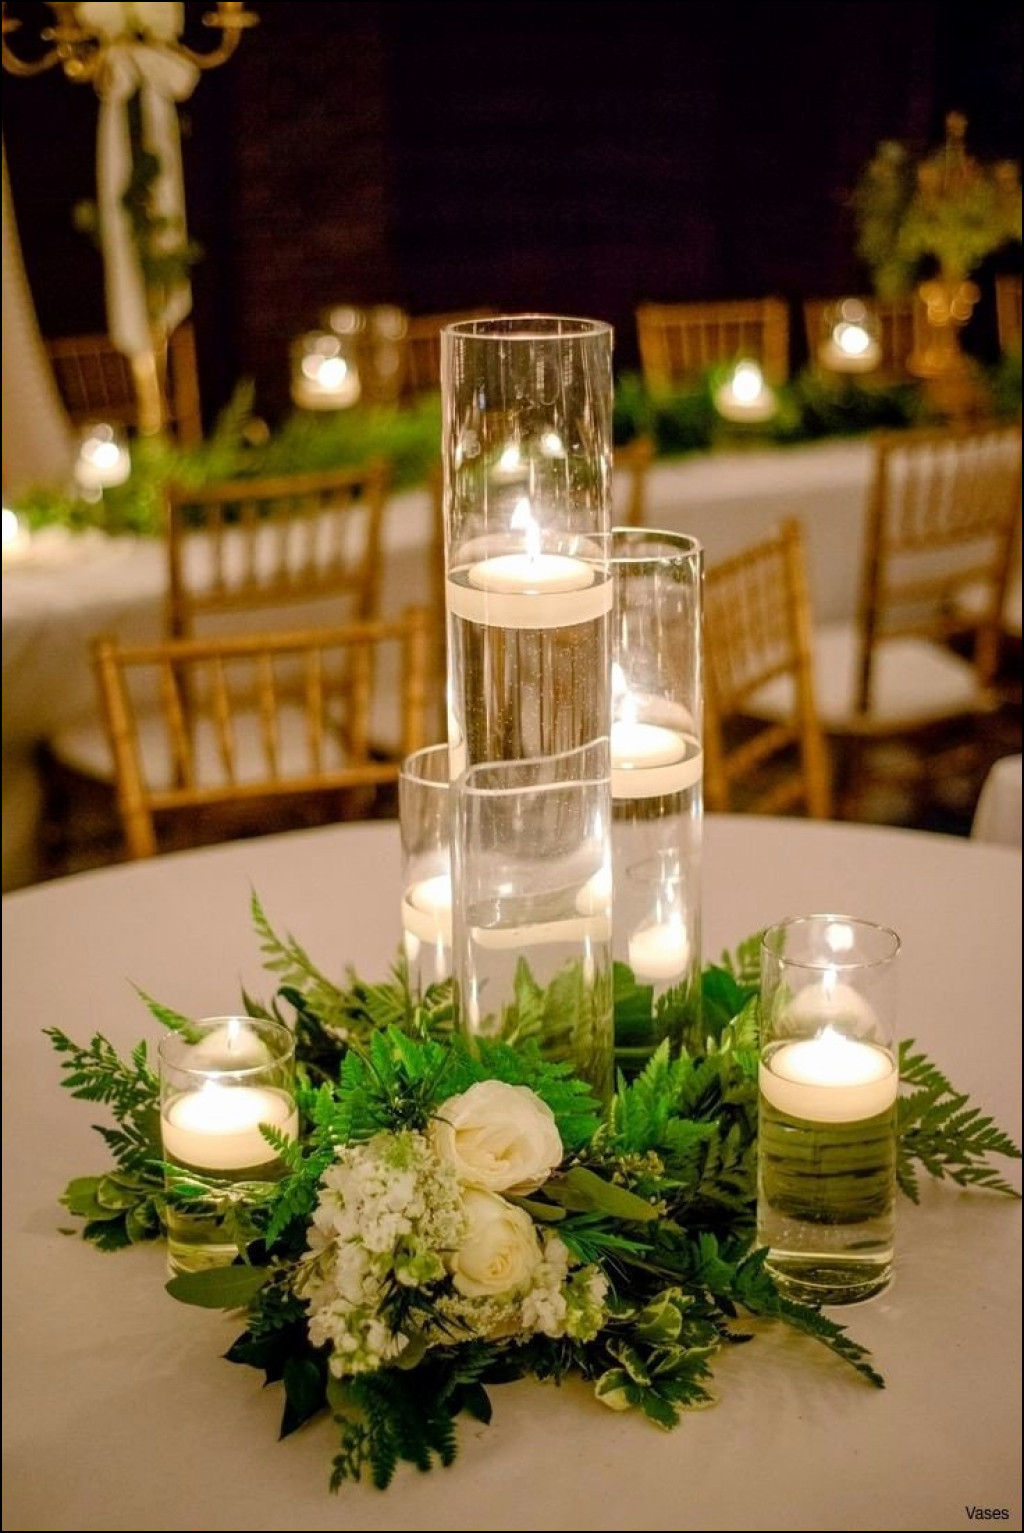 Cheap Wedding Decorations for Tables Ideas Backyard Backyard Design Ideas On A Budget Best Of Diy Backyard